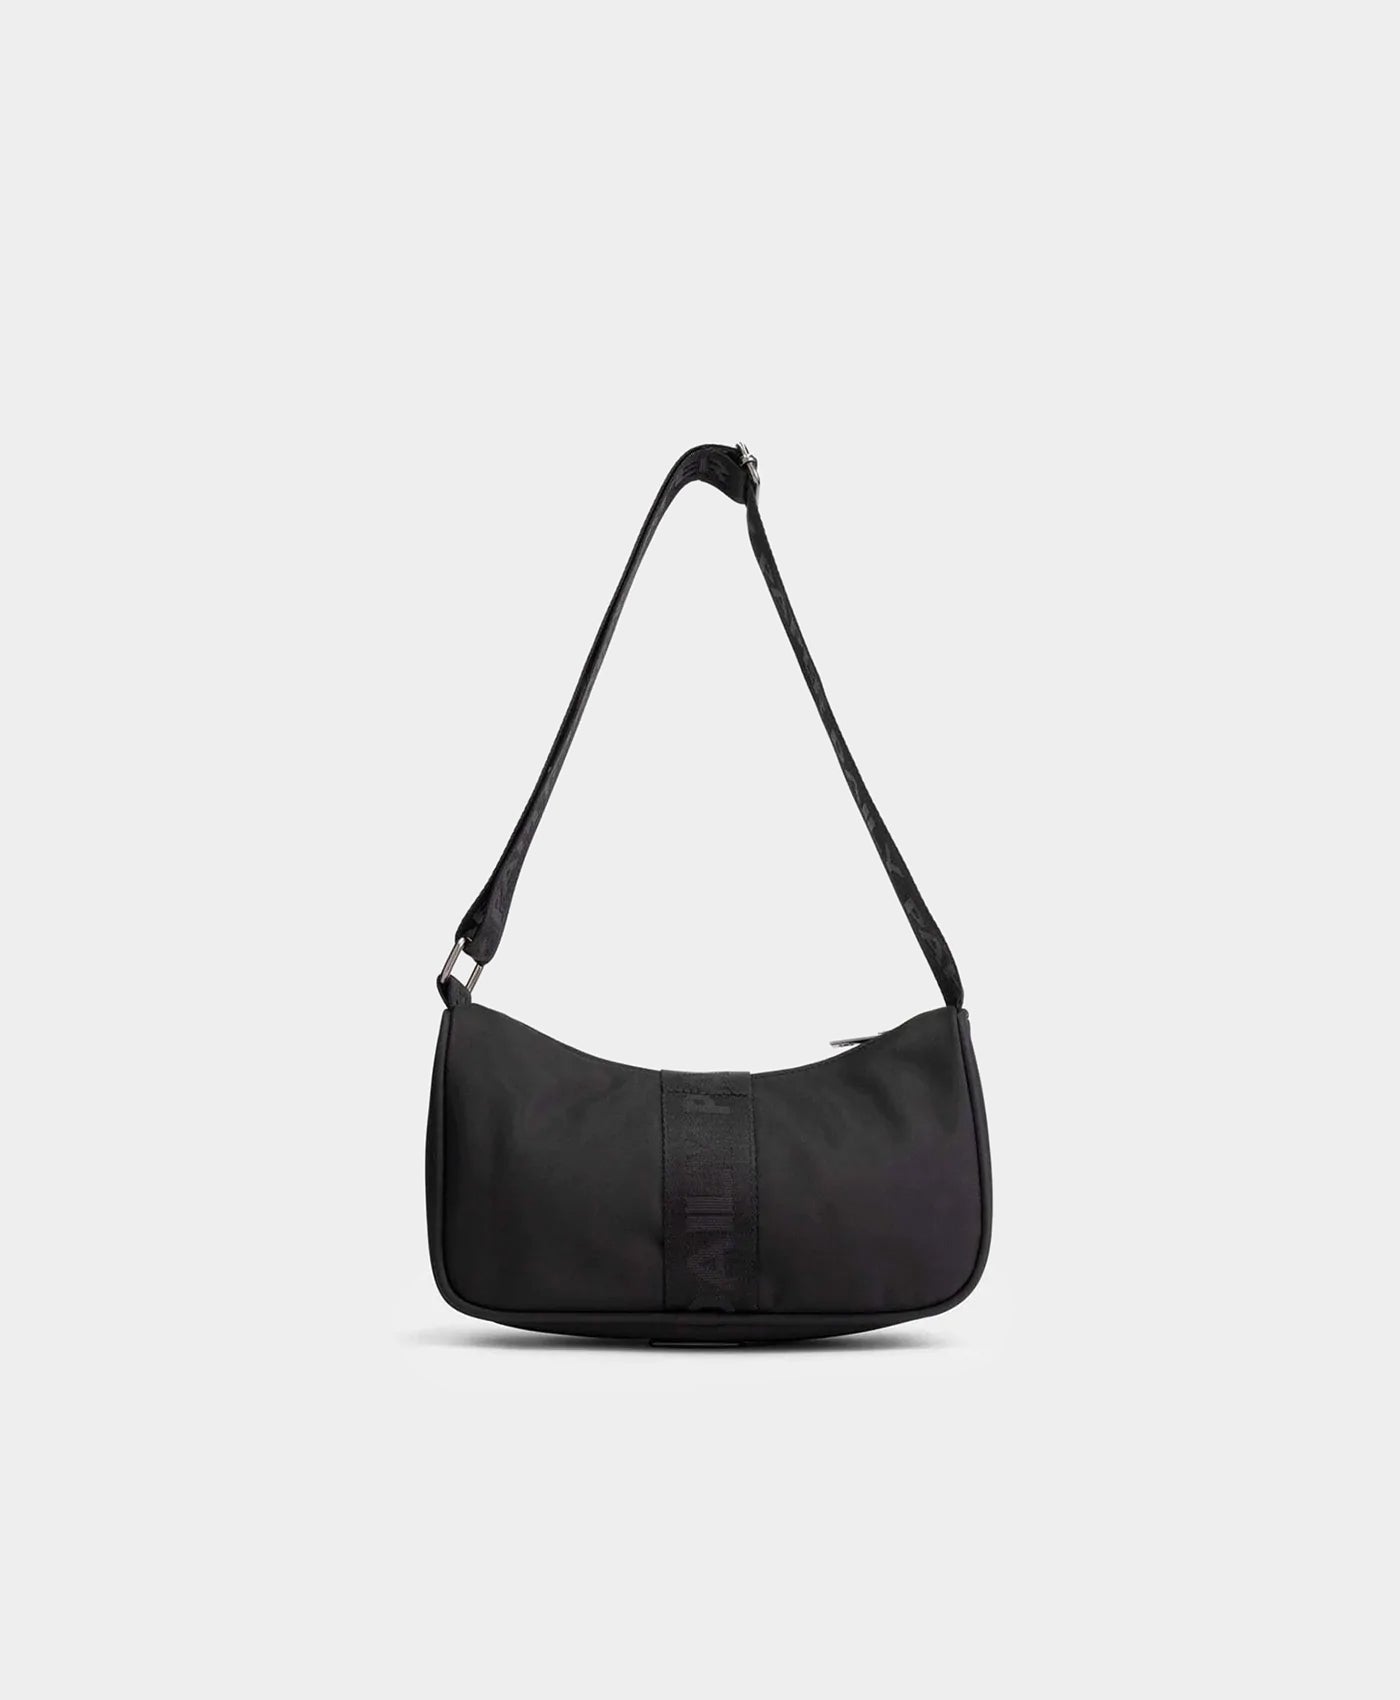 DP - Black Mina Bag - Packshot - Rear